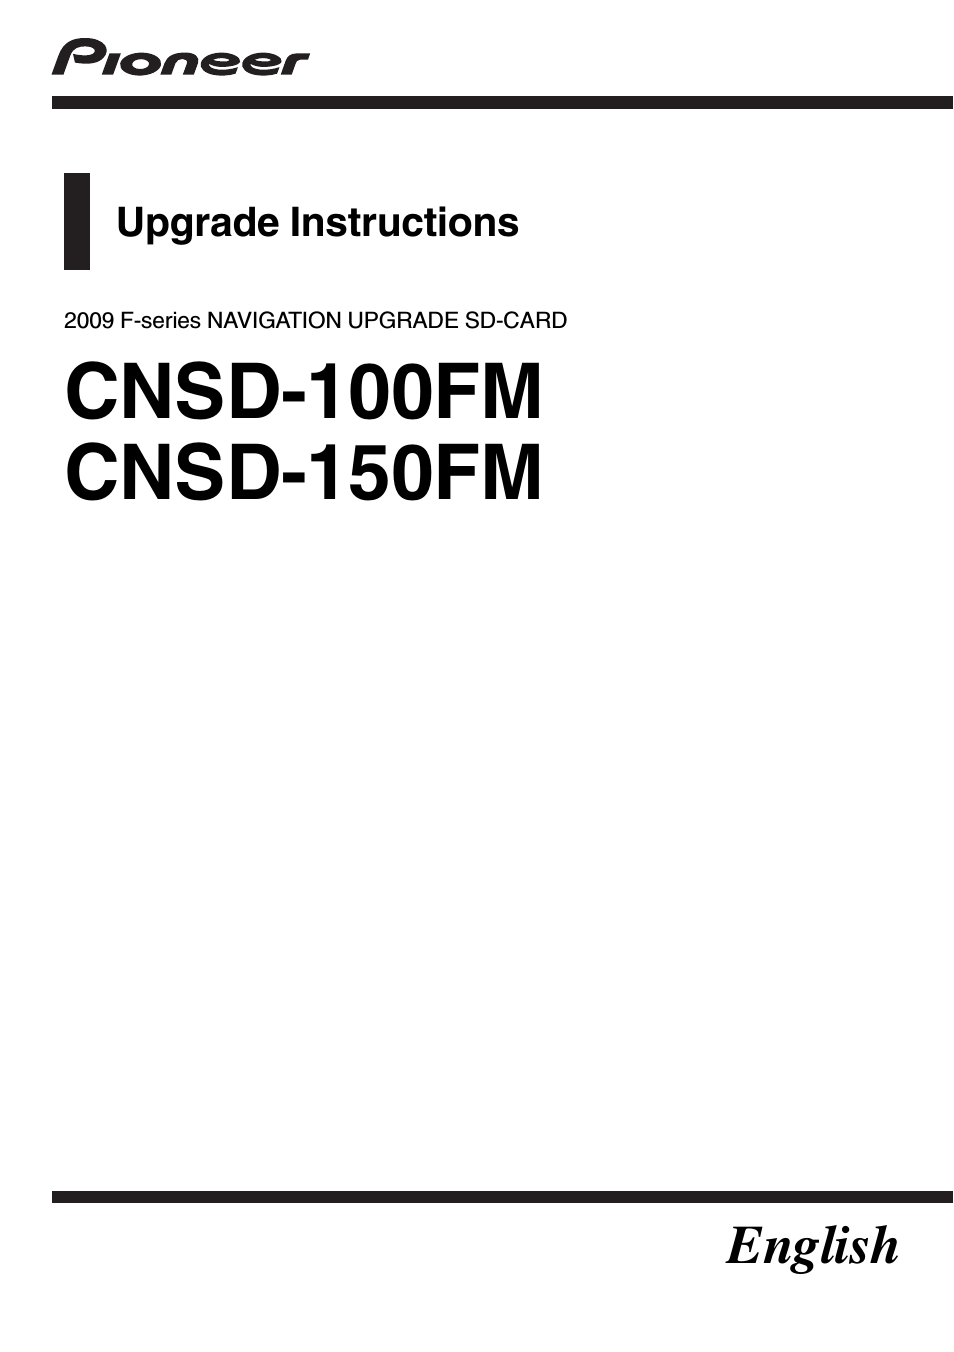 CNSD-150FM